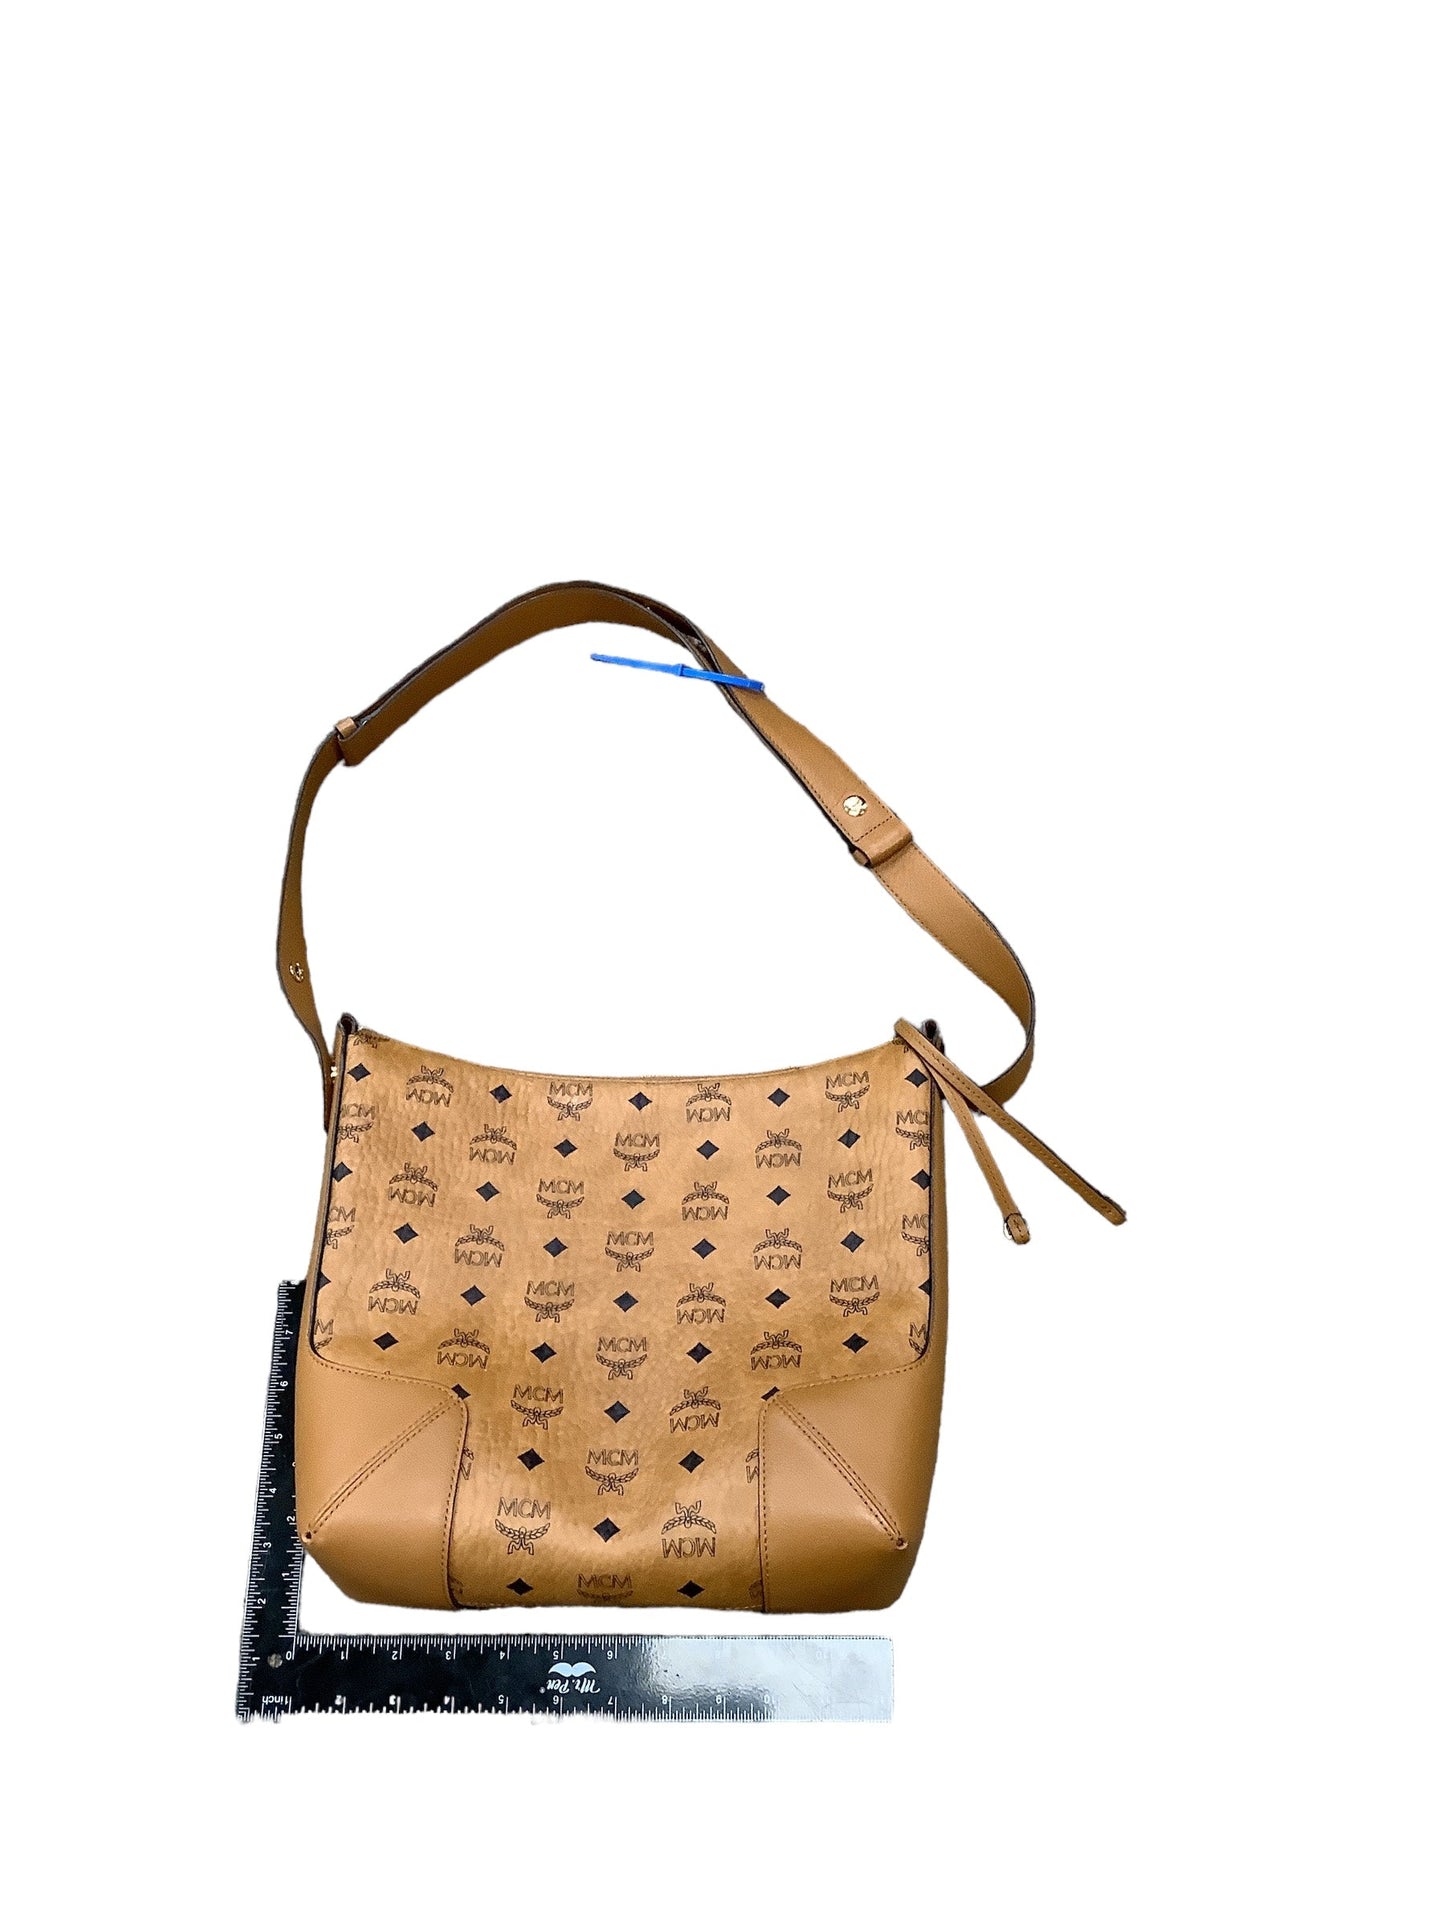 Handbag Luxury Designer Mcm, Size Medium